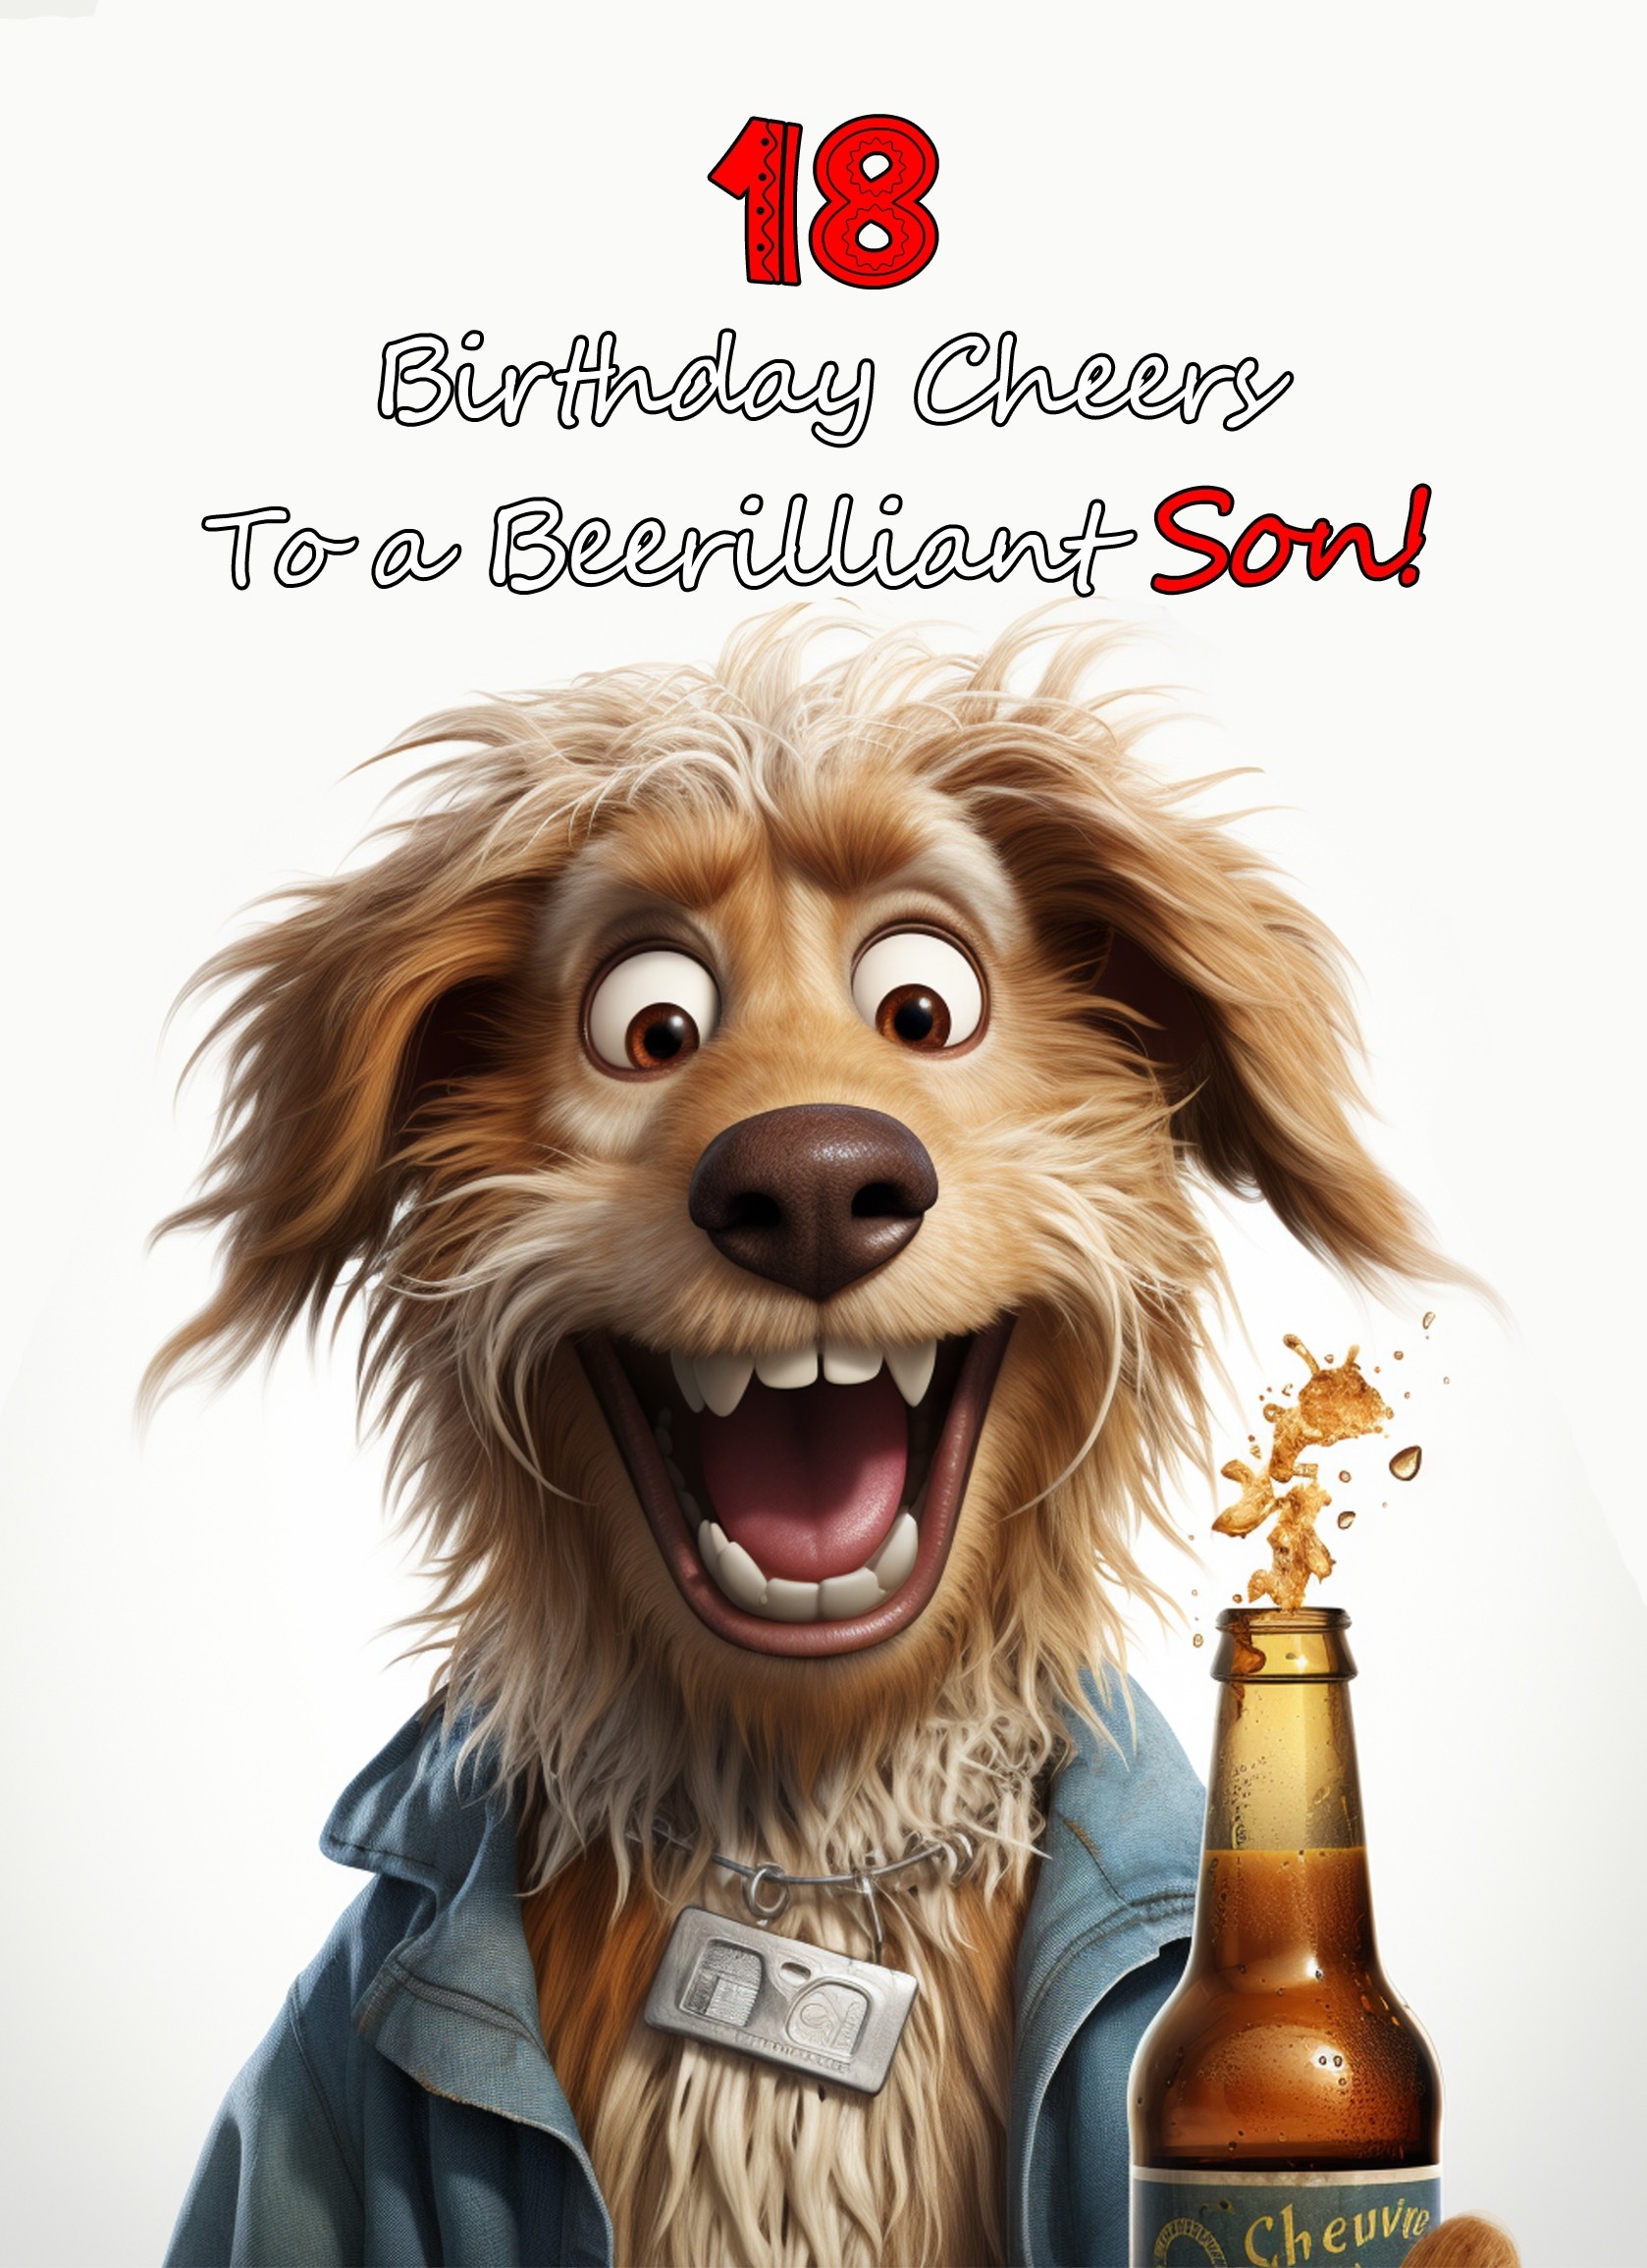 Son 18th Birthday Card (Funny Beerilliant Birthday Cheers)